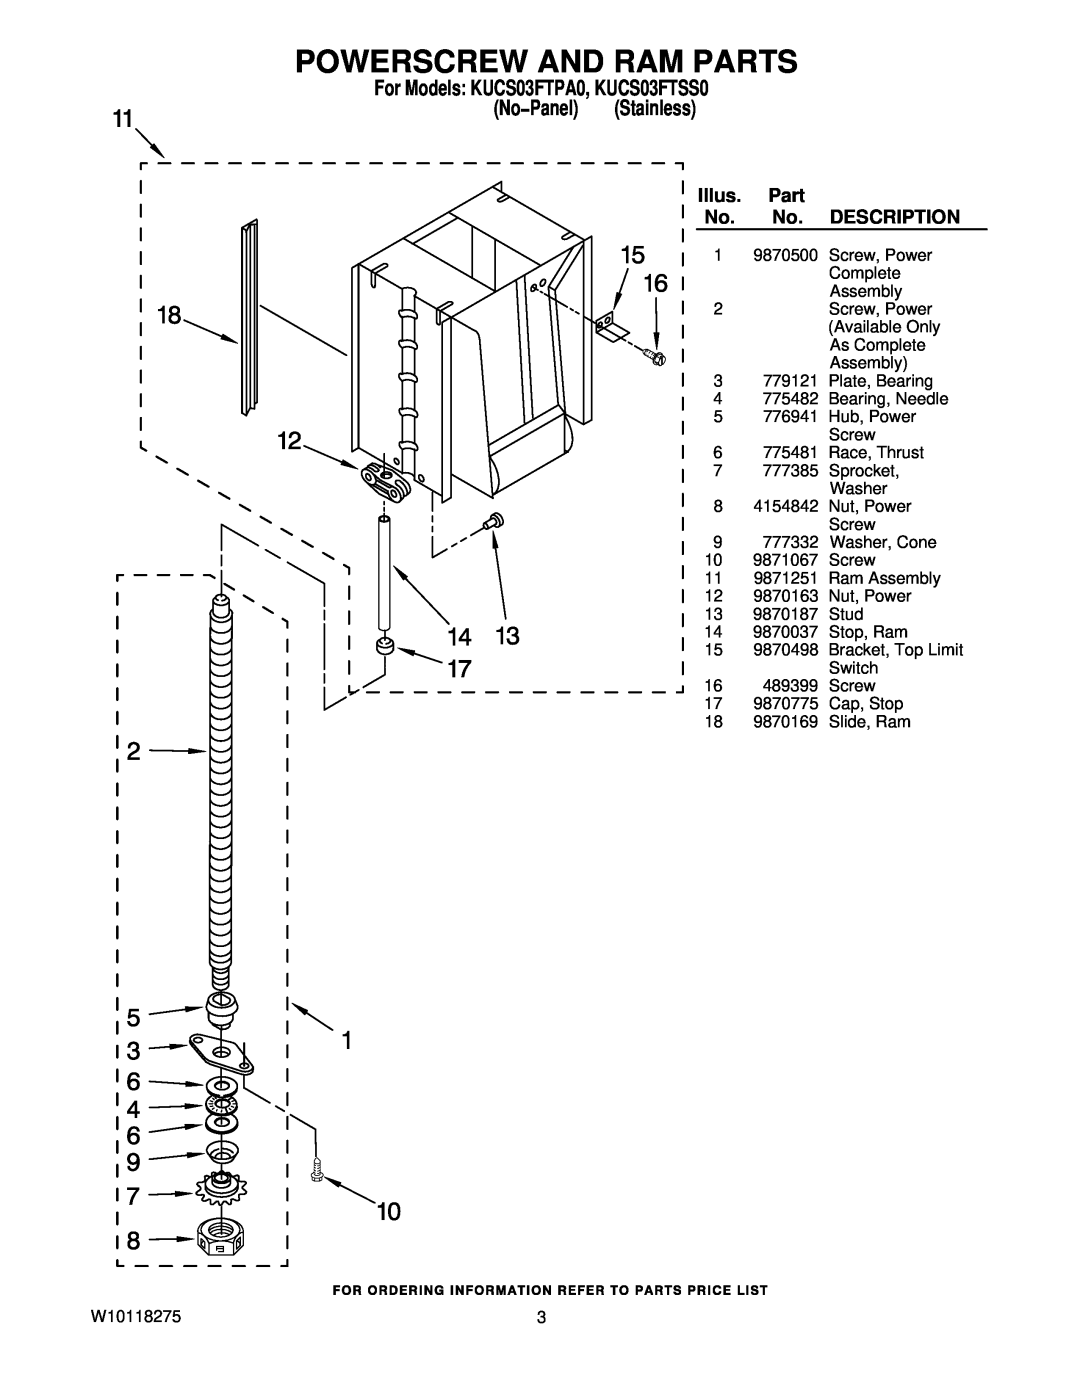 KitchenAid manual Powerscrew And Ram Parts, For Models KUCS03FTPA0, KUCS03FTSS0, No−Panel Stainless, Illus, Description 